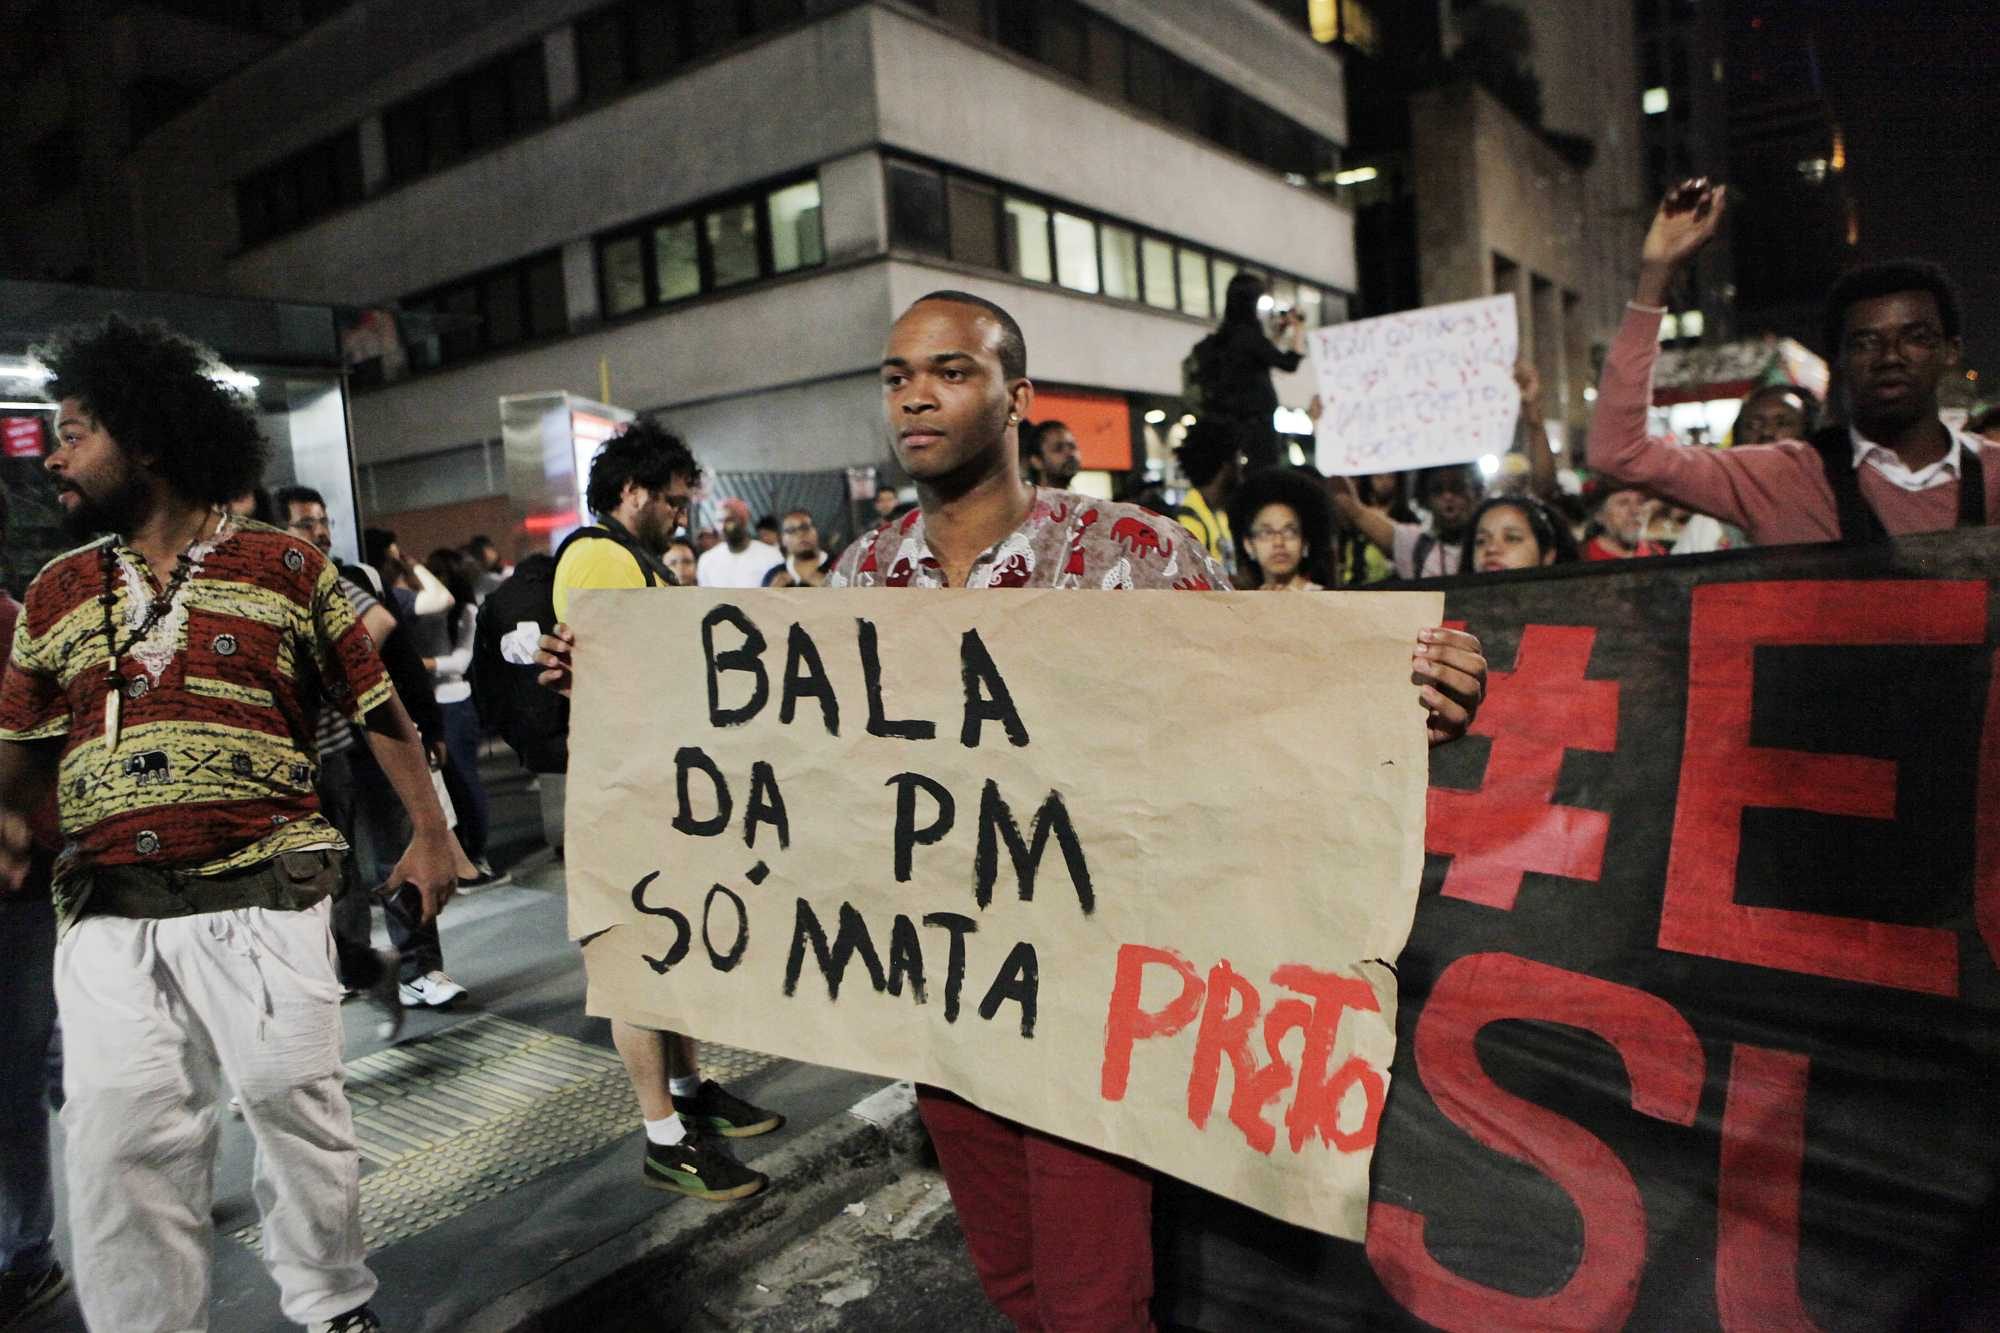 March pro black right. The police bullets only kill blacks - Oswaldo Corneti/Fotos Públicas